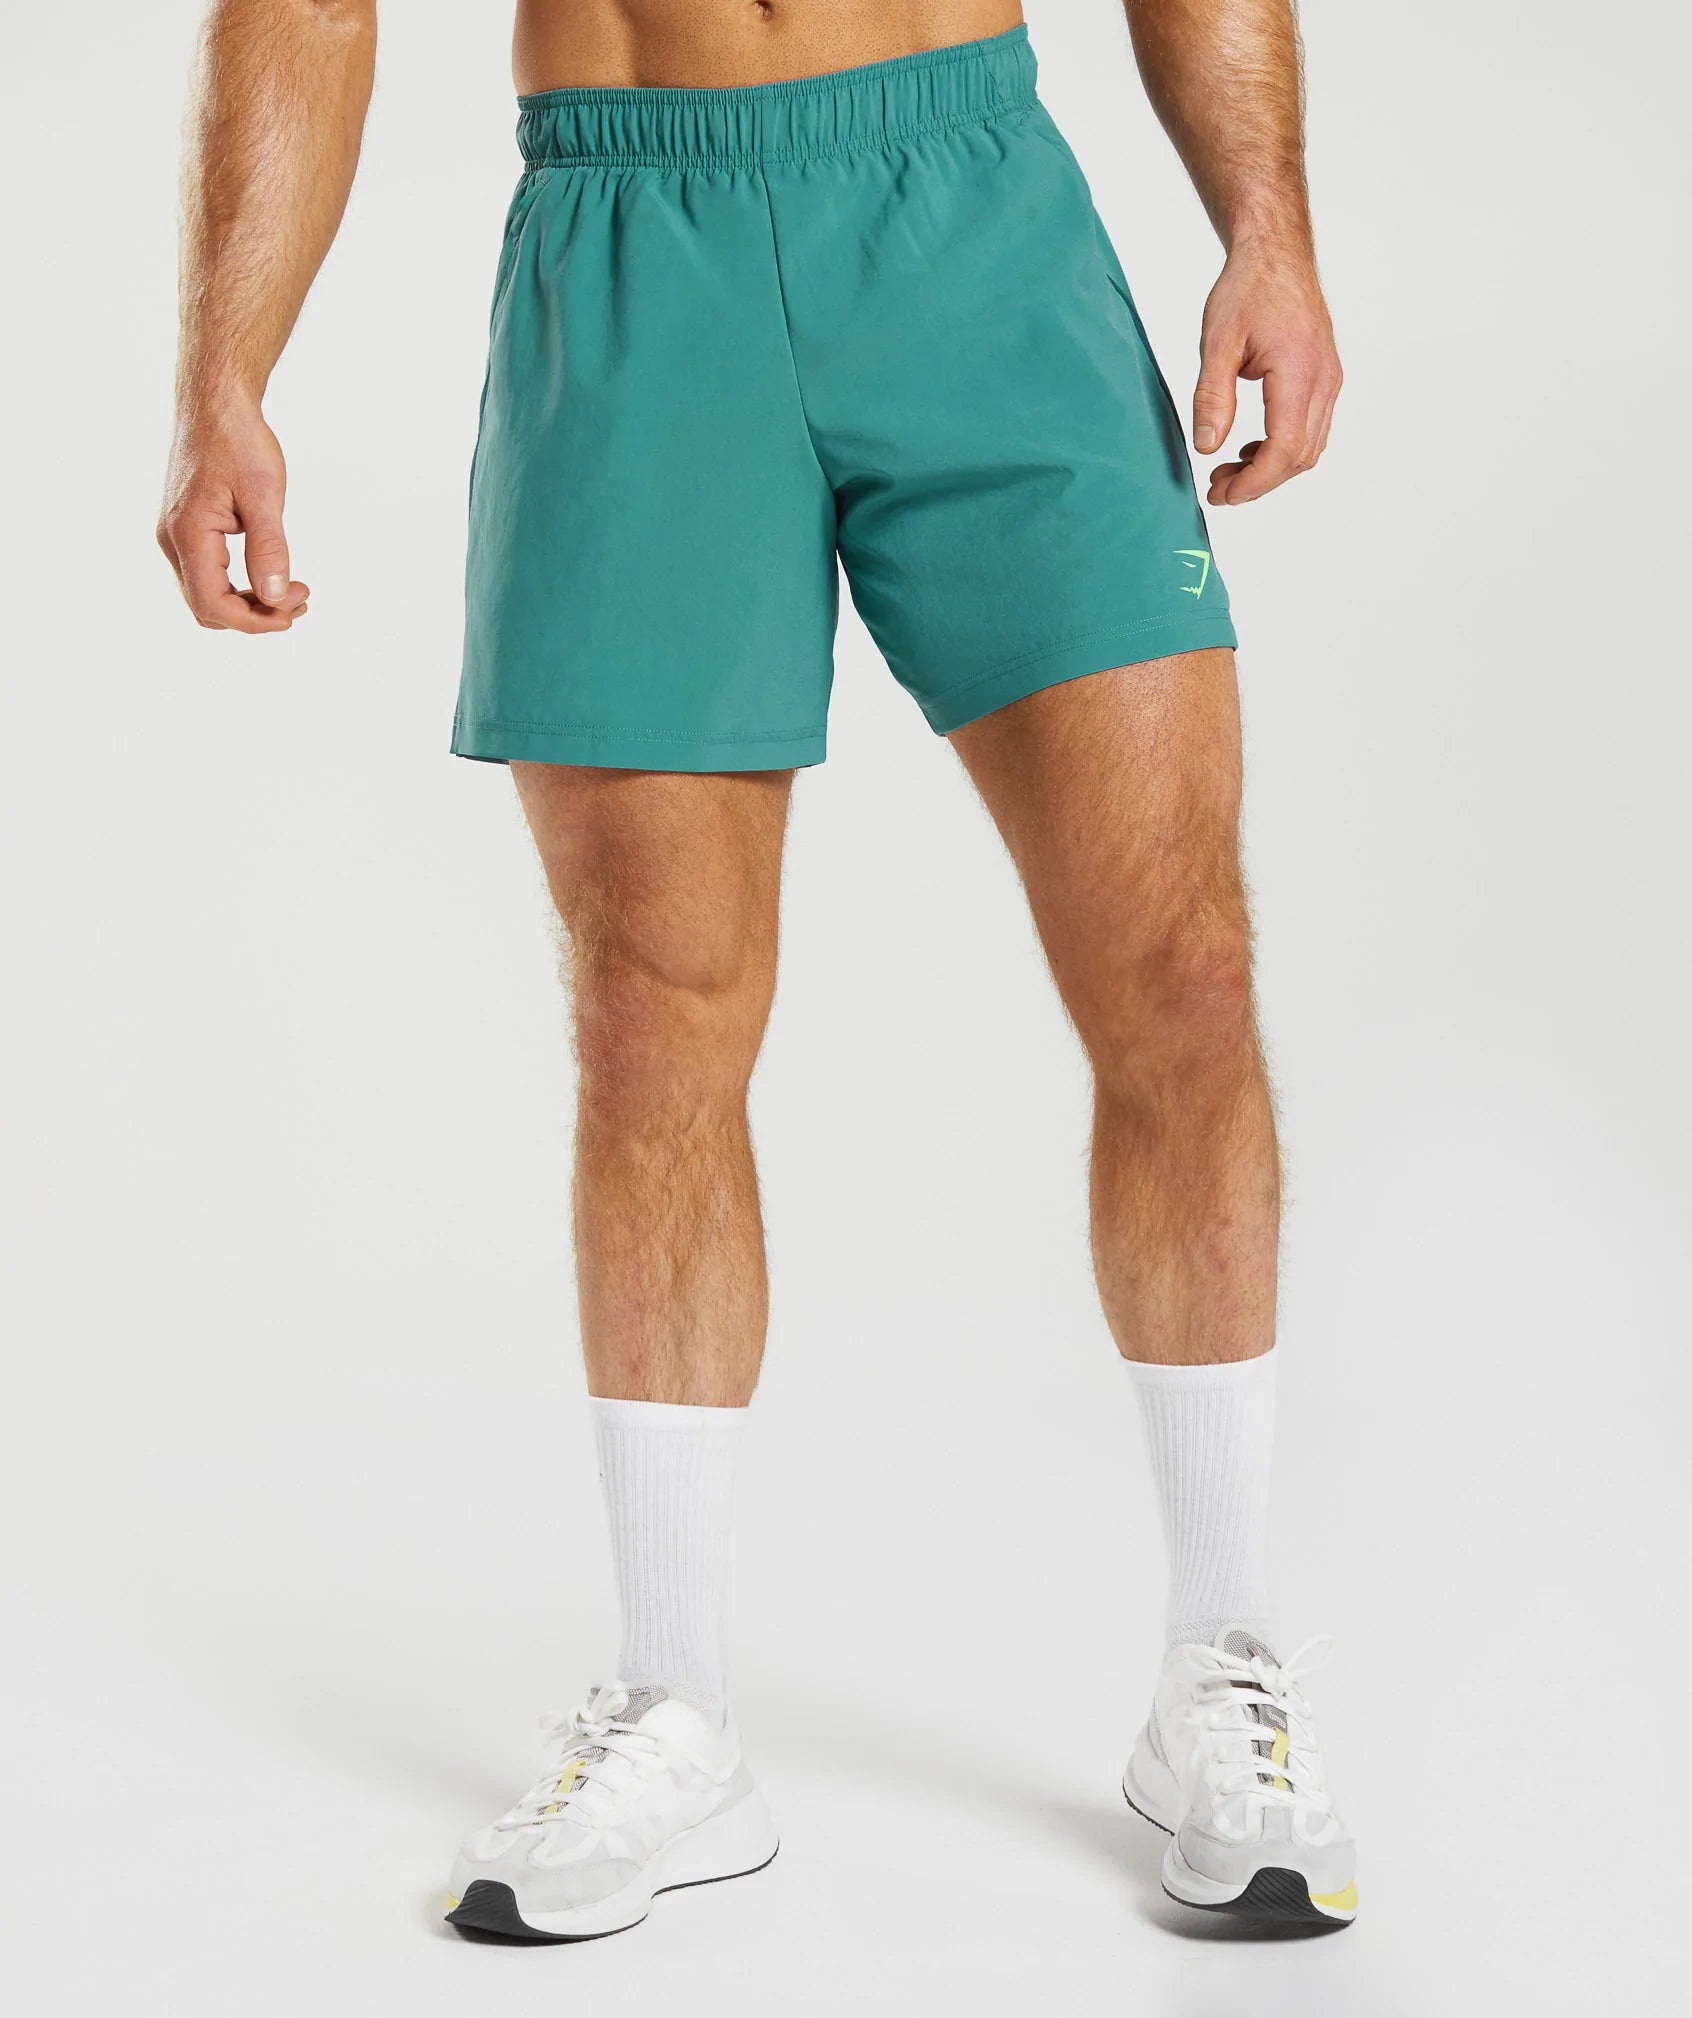 Gymshark Lift Shorts - Men